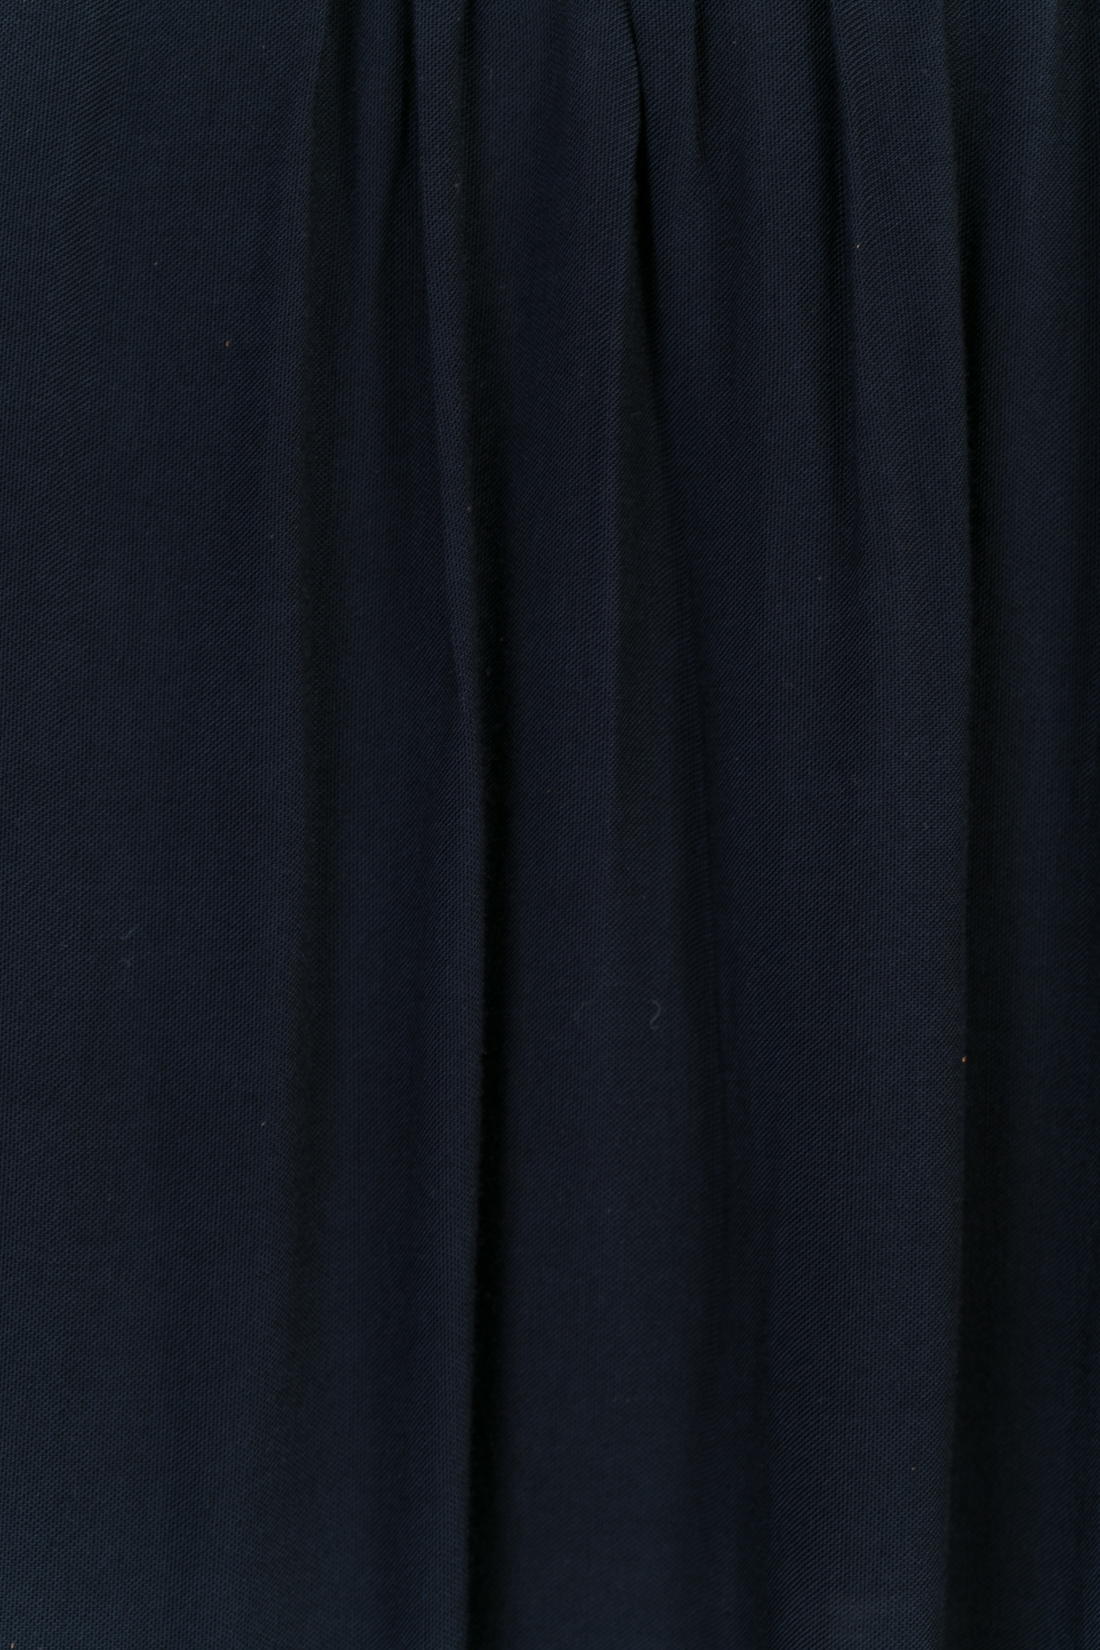 Длинная юбка с ремешком (арт. baon B477041), размер 3XL, цвет синий Длинная юбка с ремешком (арт. baon B477041) - фото 3